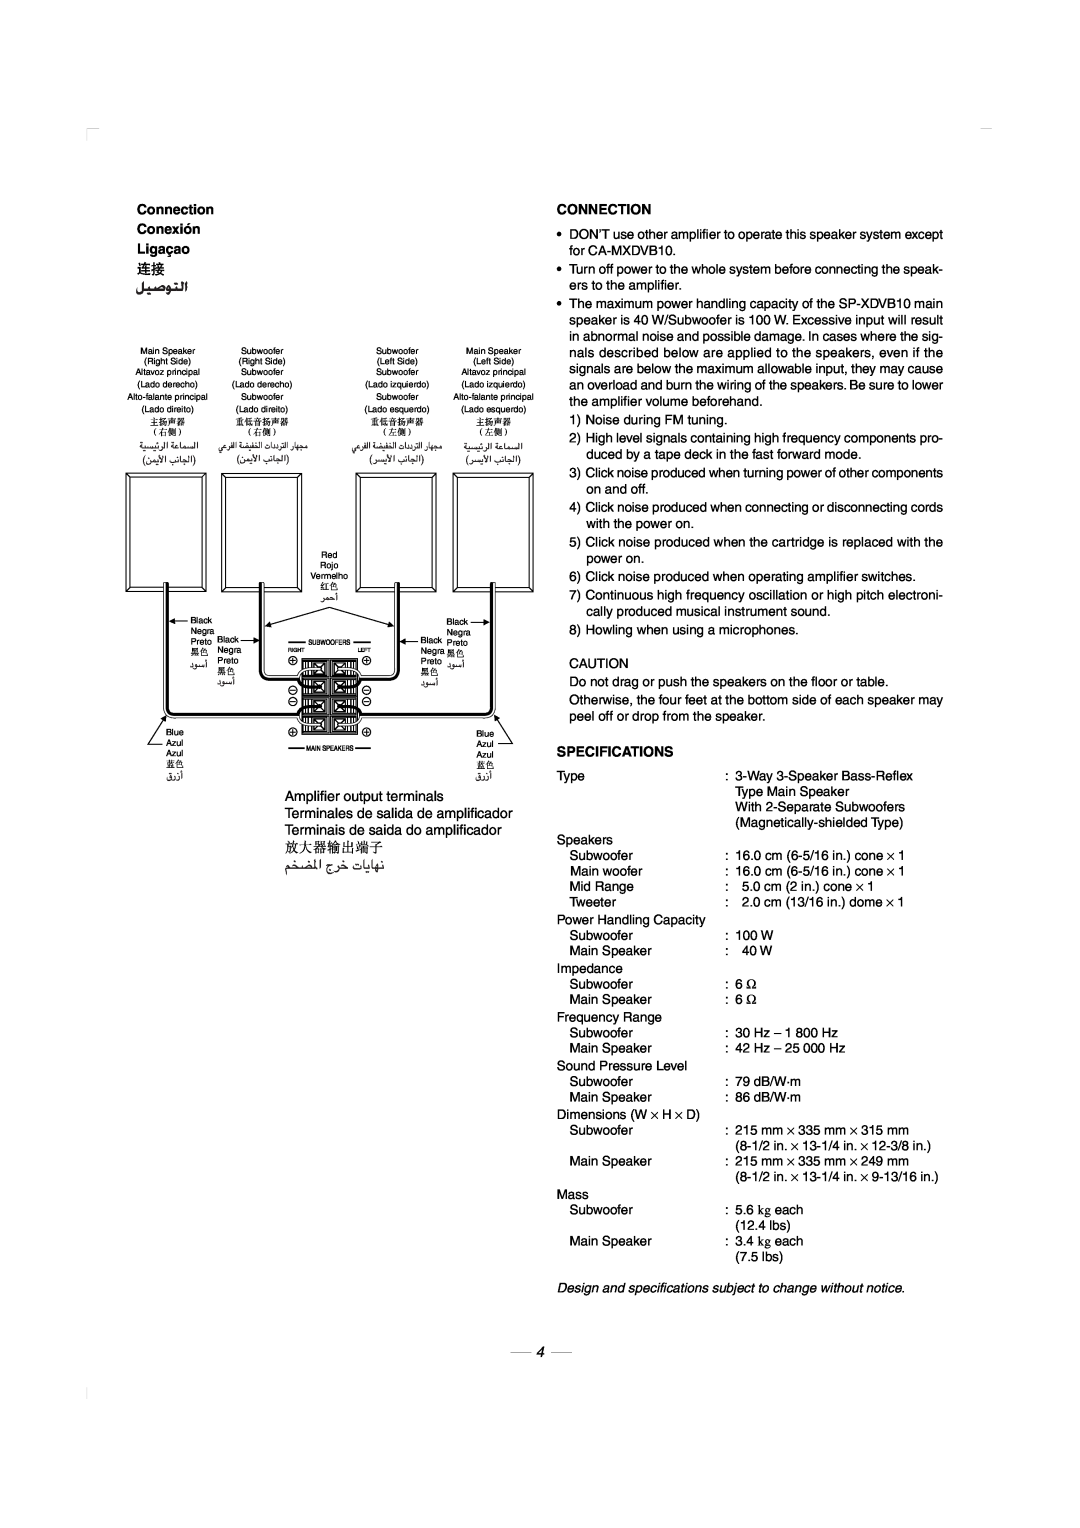 JVC CA-MXDVA9, CA-MXDVB10 manual ﻢﺨﻀﳌا جﺮﺧ تﺎﻳﺎﻬﻧ, Connection Conexión Ligaçao, Specifications 